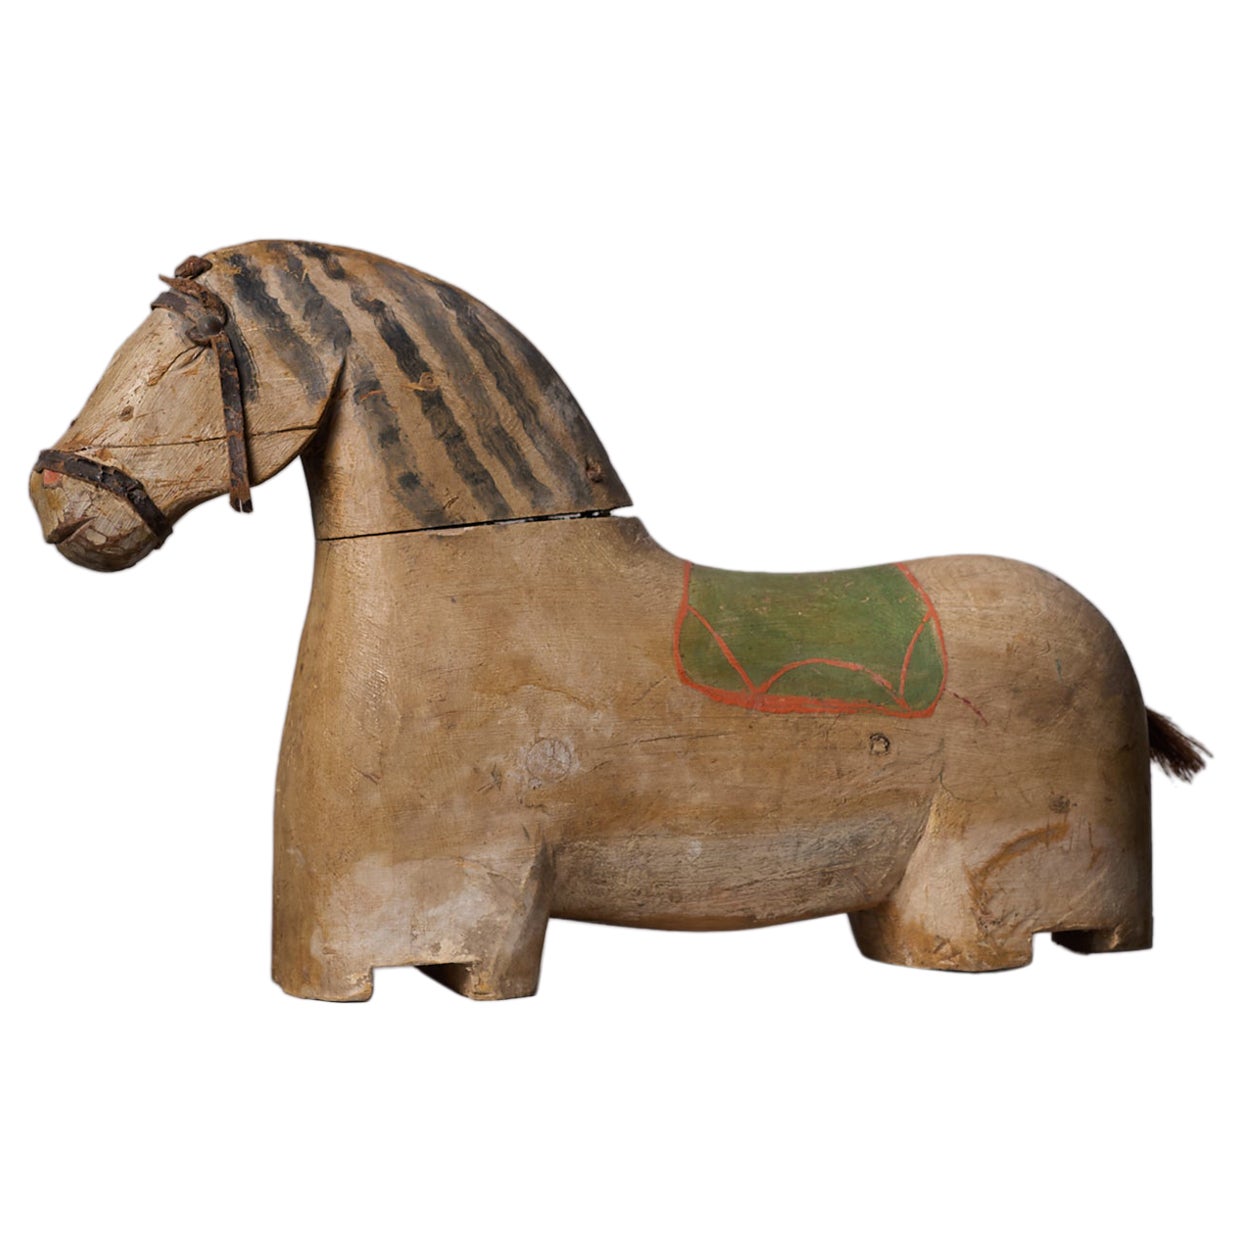 Antike Tierpferd-Skulptur aus Holz, nord Schwedische Volkskunst, Originalfarbe 